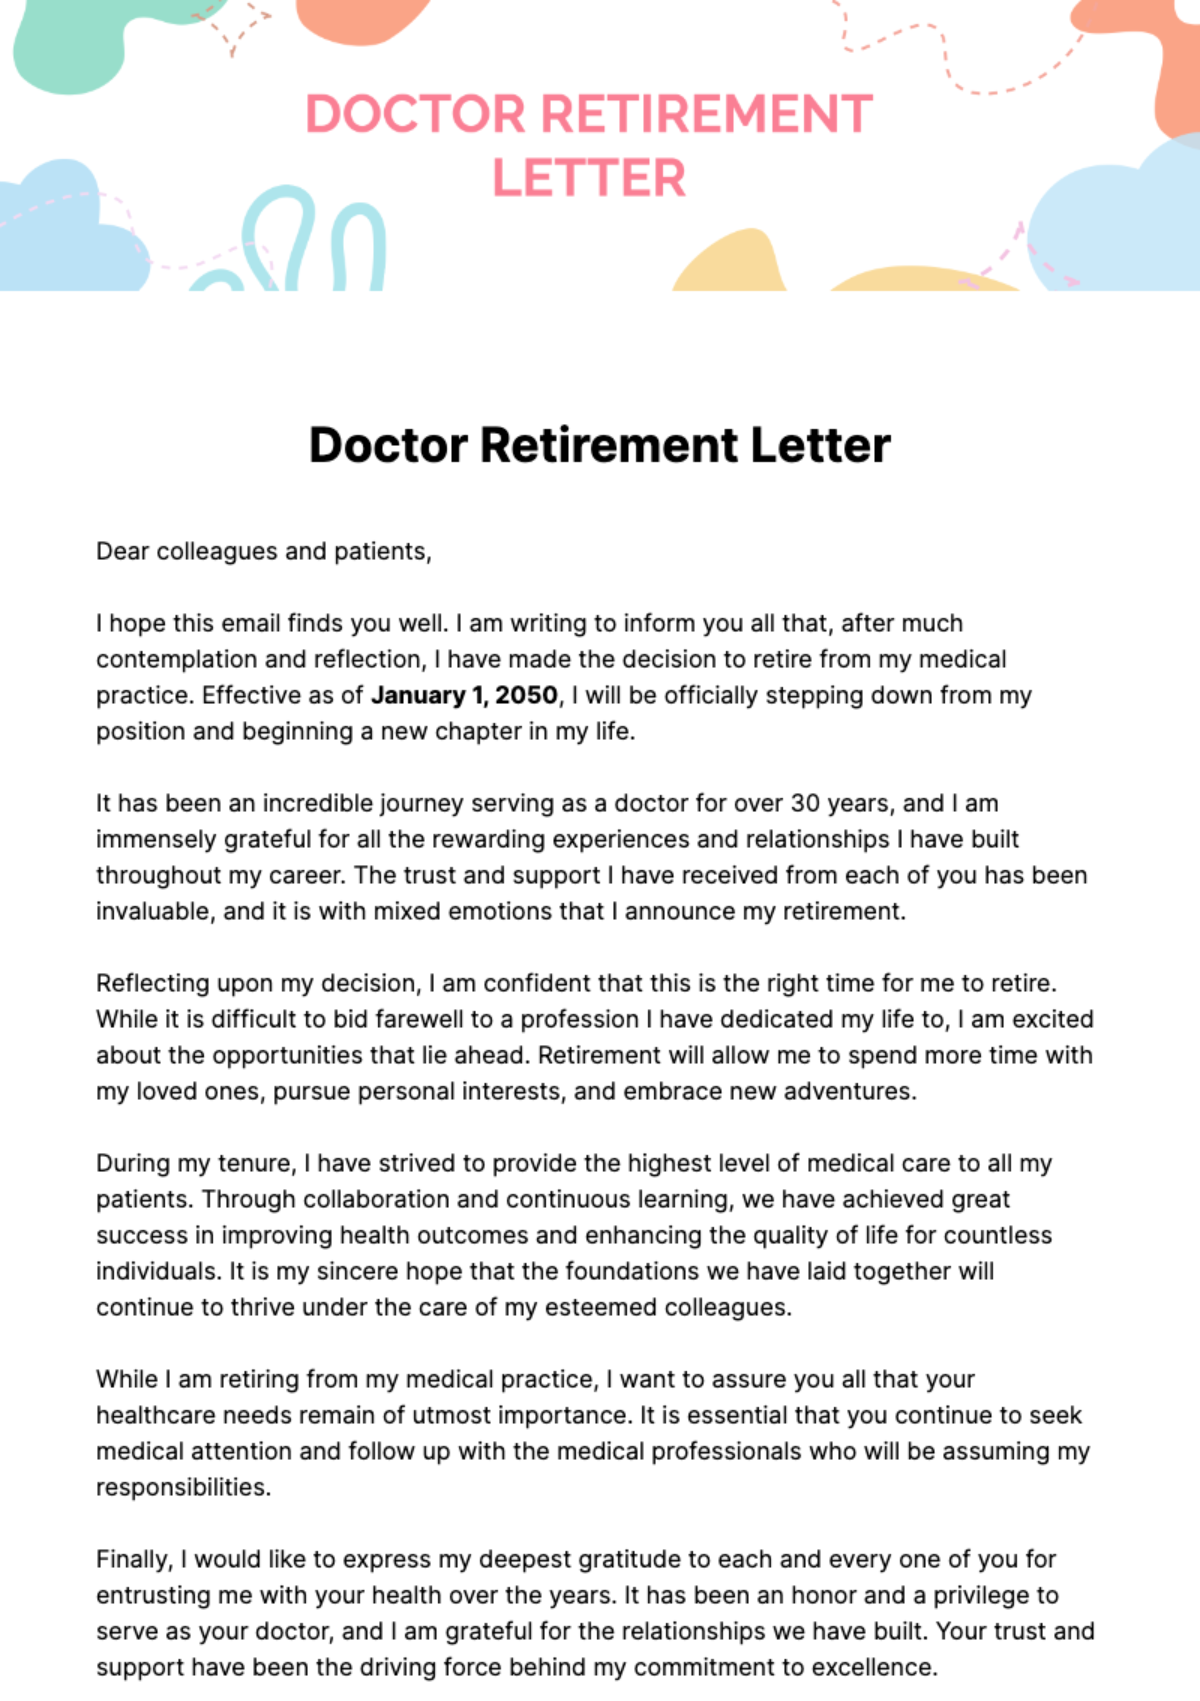 Doctor Retirement Letter Template